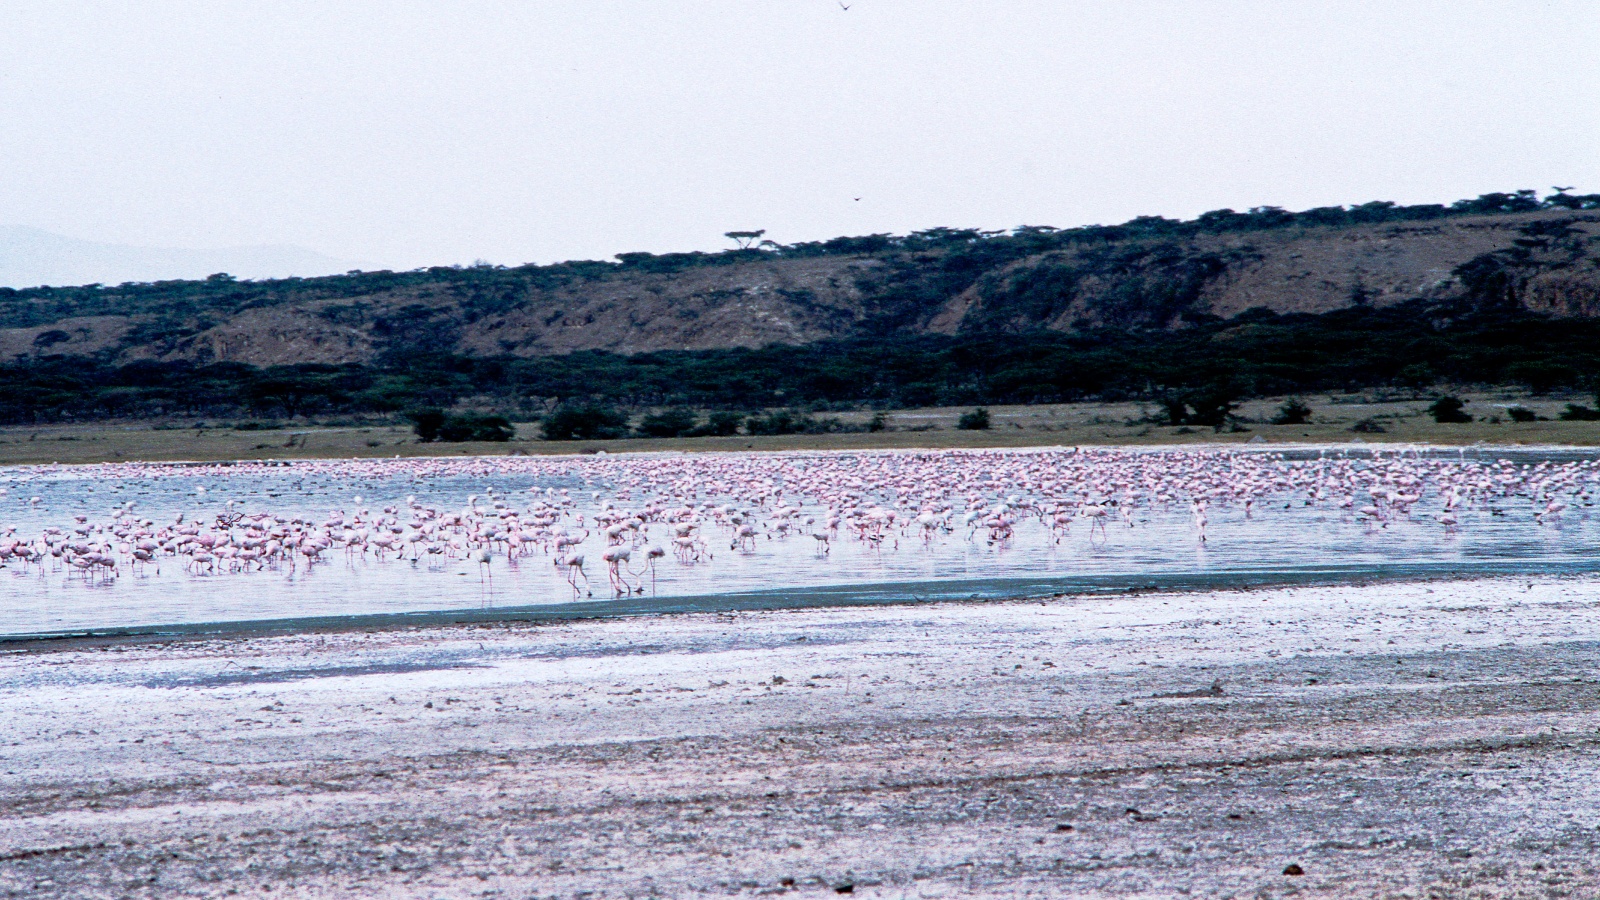 Flamingos standing along the shore of Lake Abijata